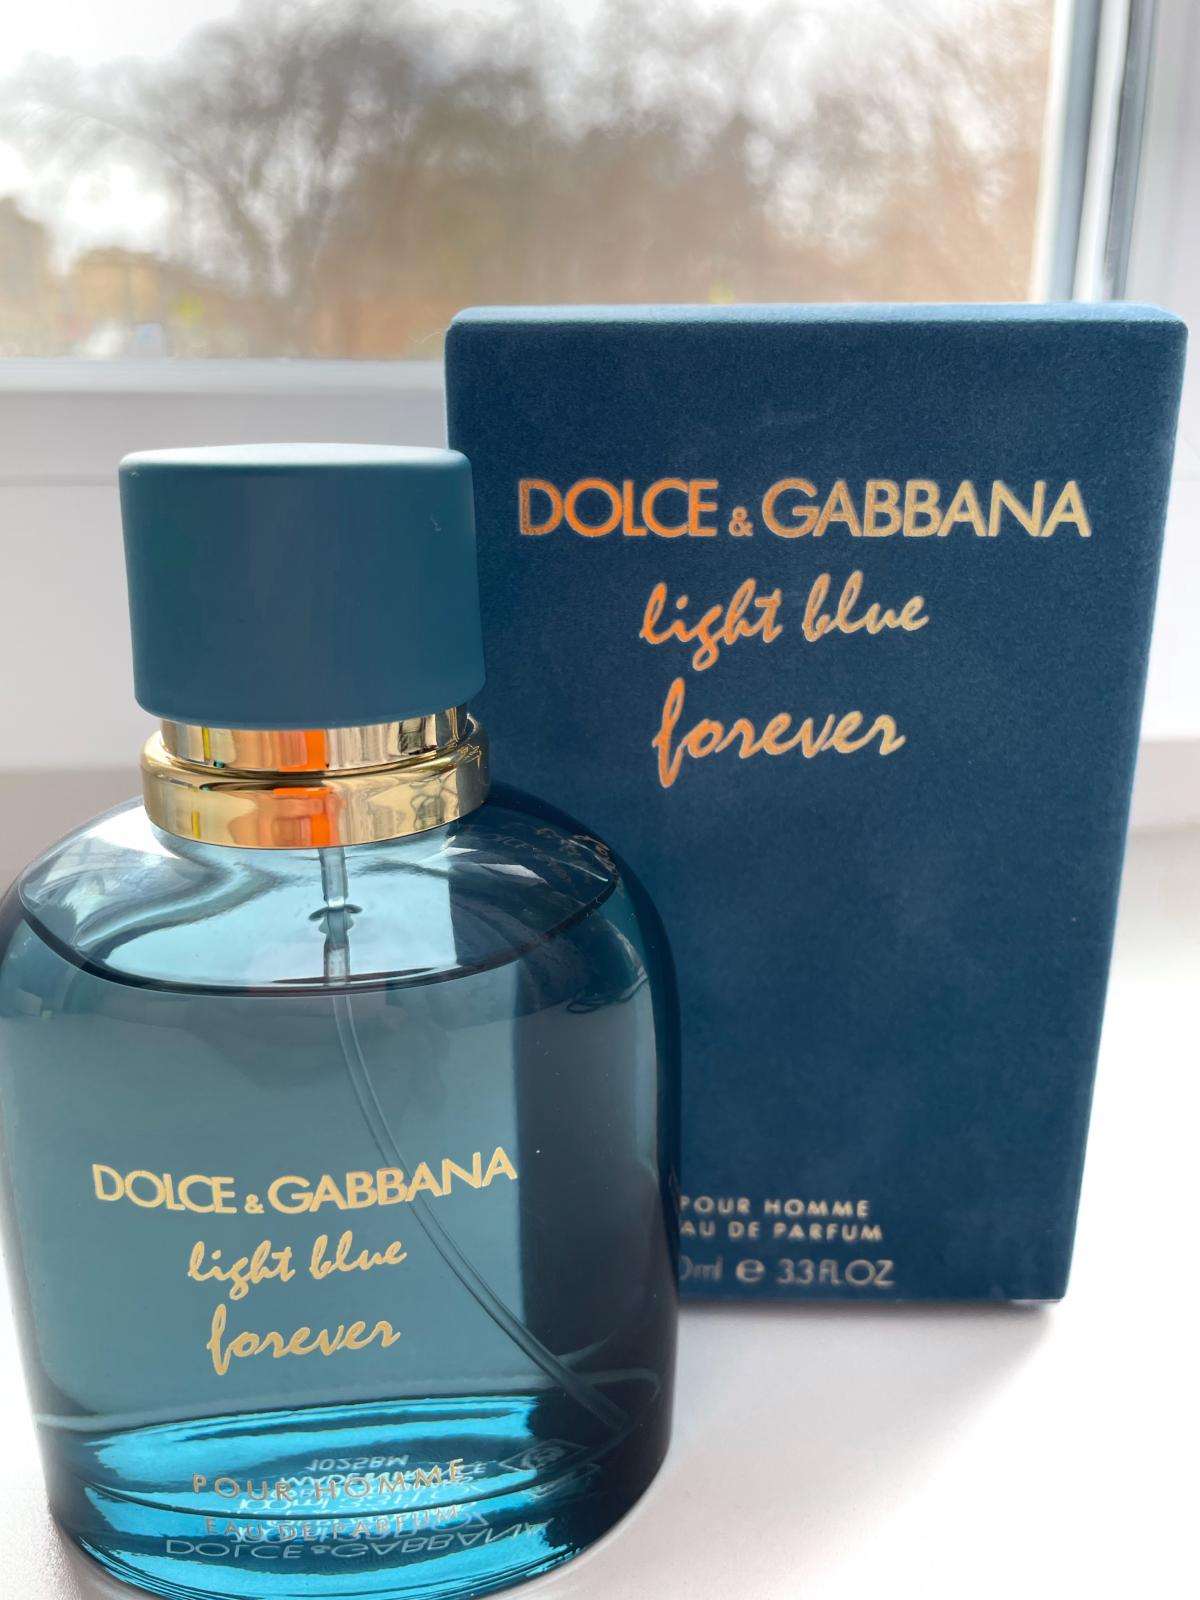 Light blue forever pour homme dolce gabbana